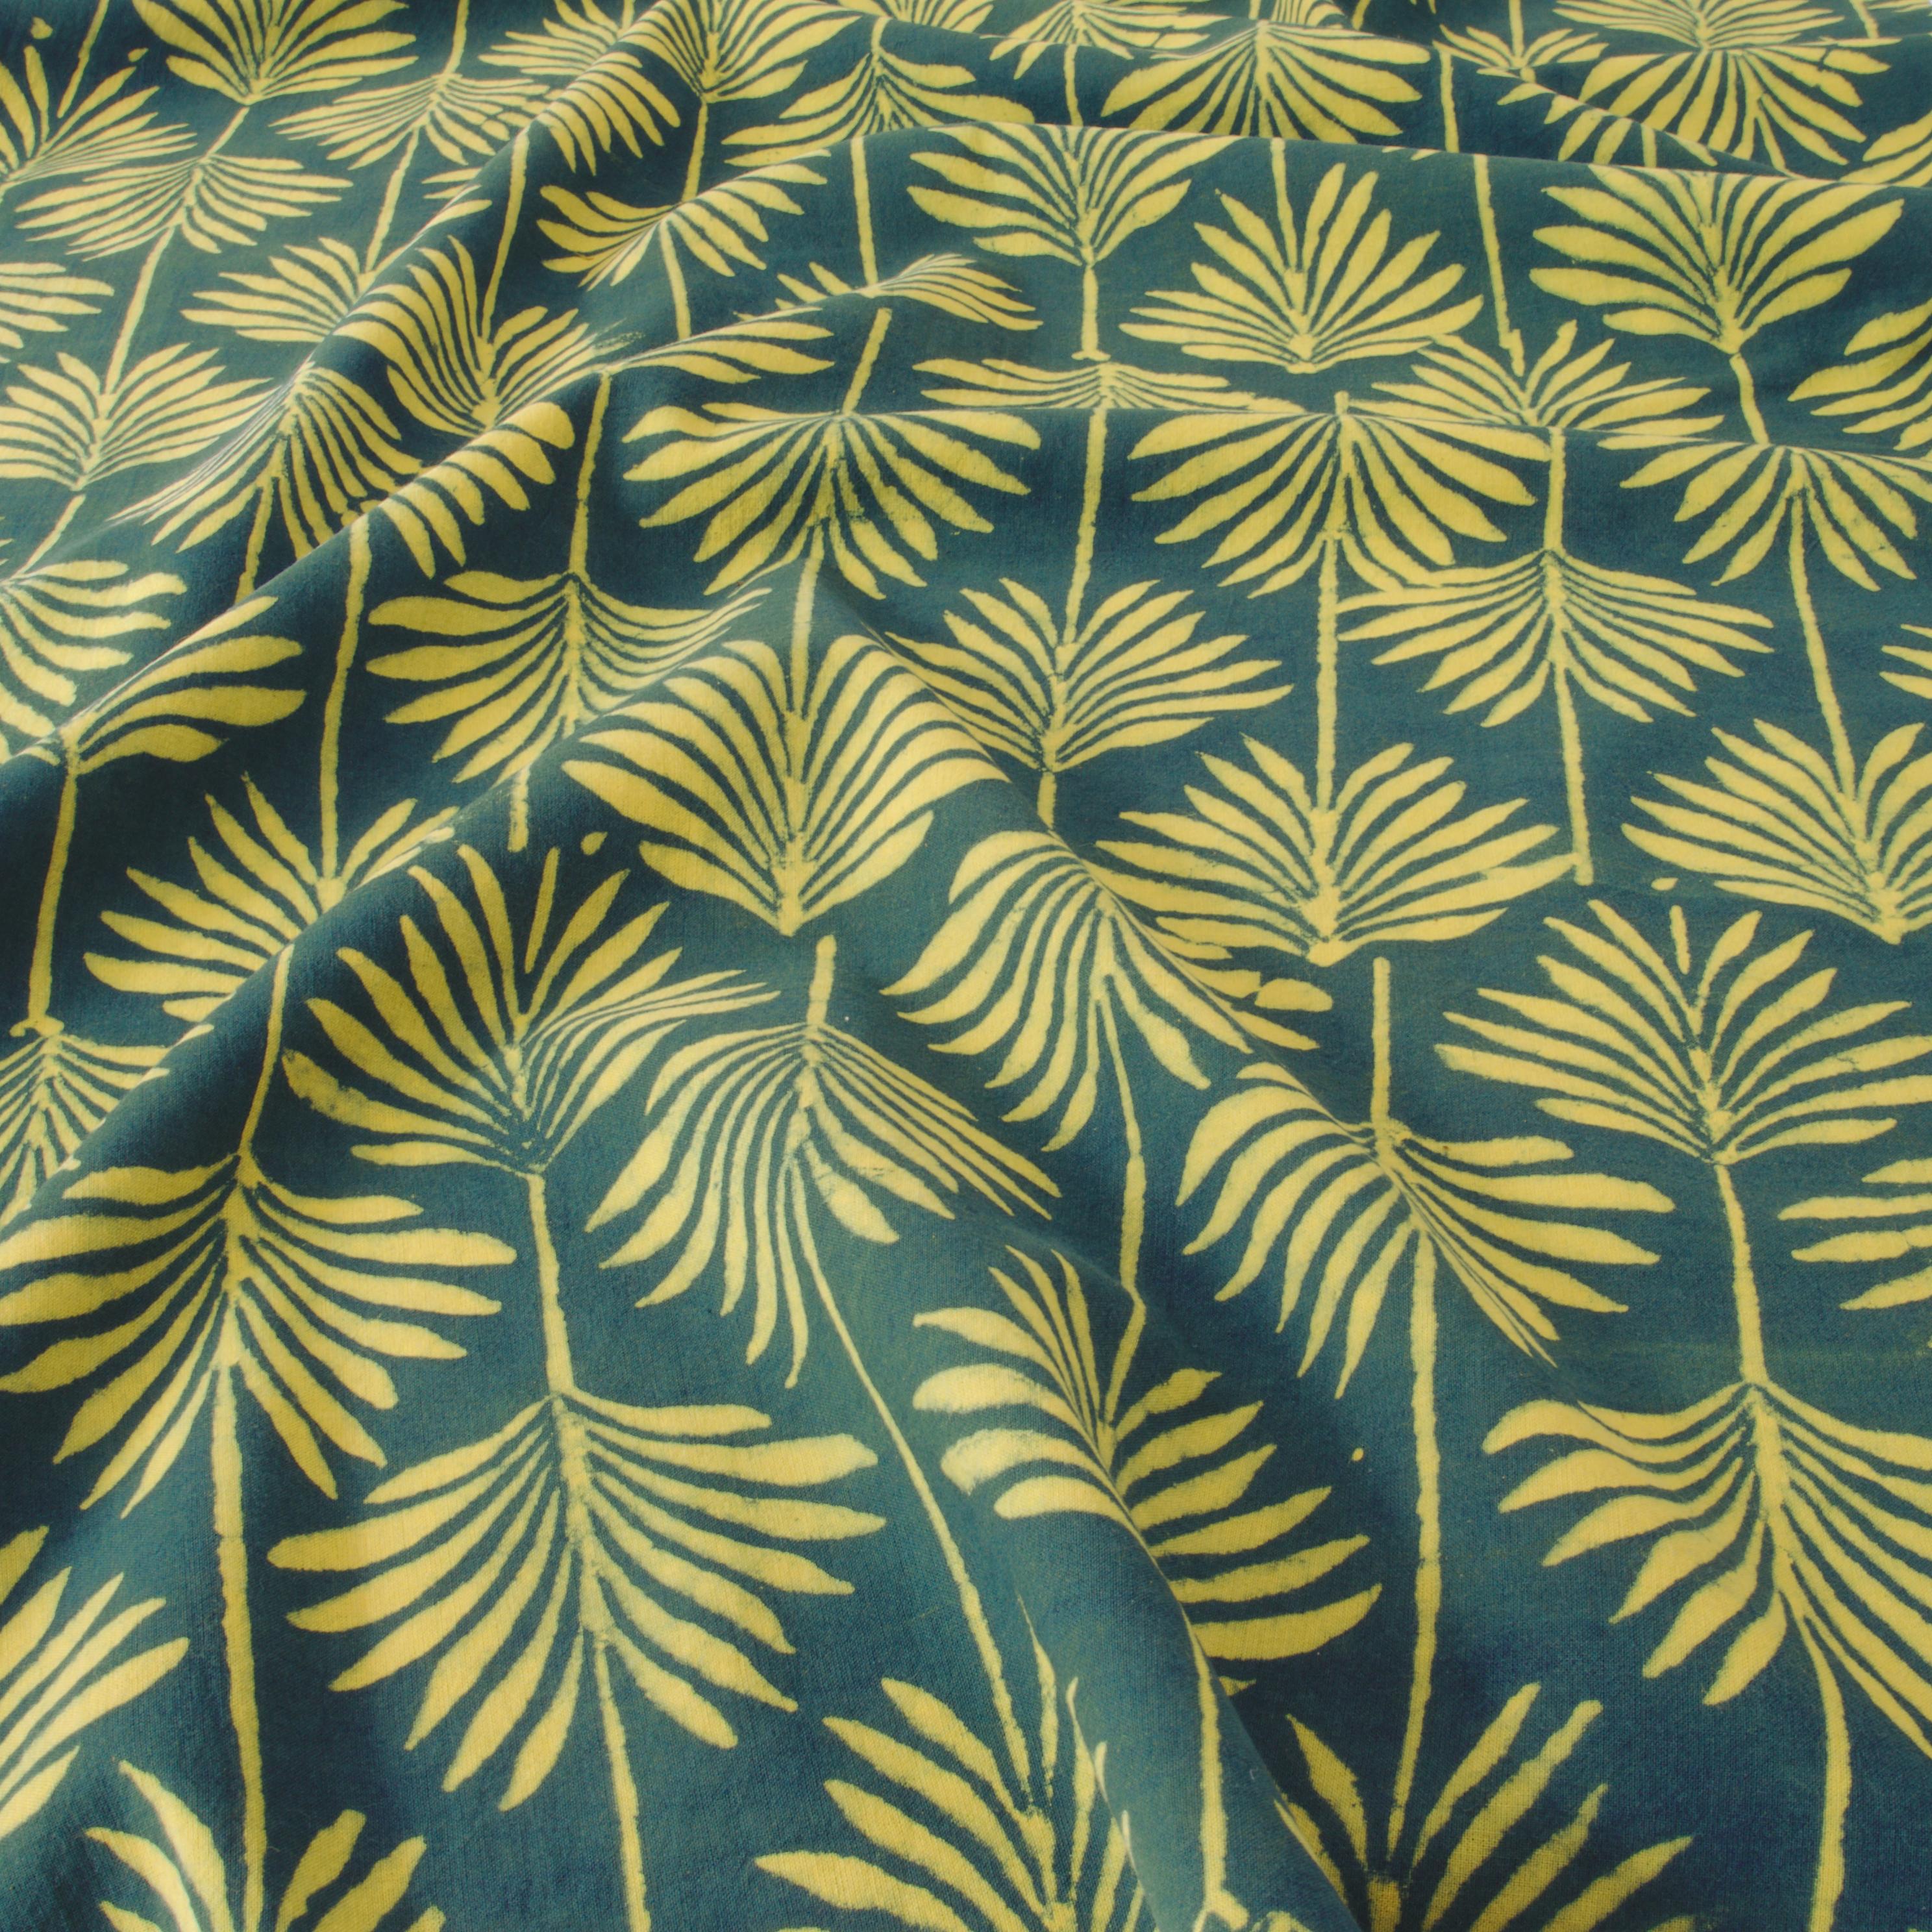 1 - SIK48 - Hand Block-Printed Cotton - Negril Palm Design - Green & Yellow Dye - Angle